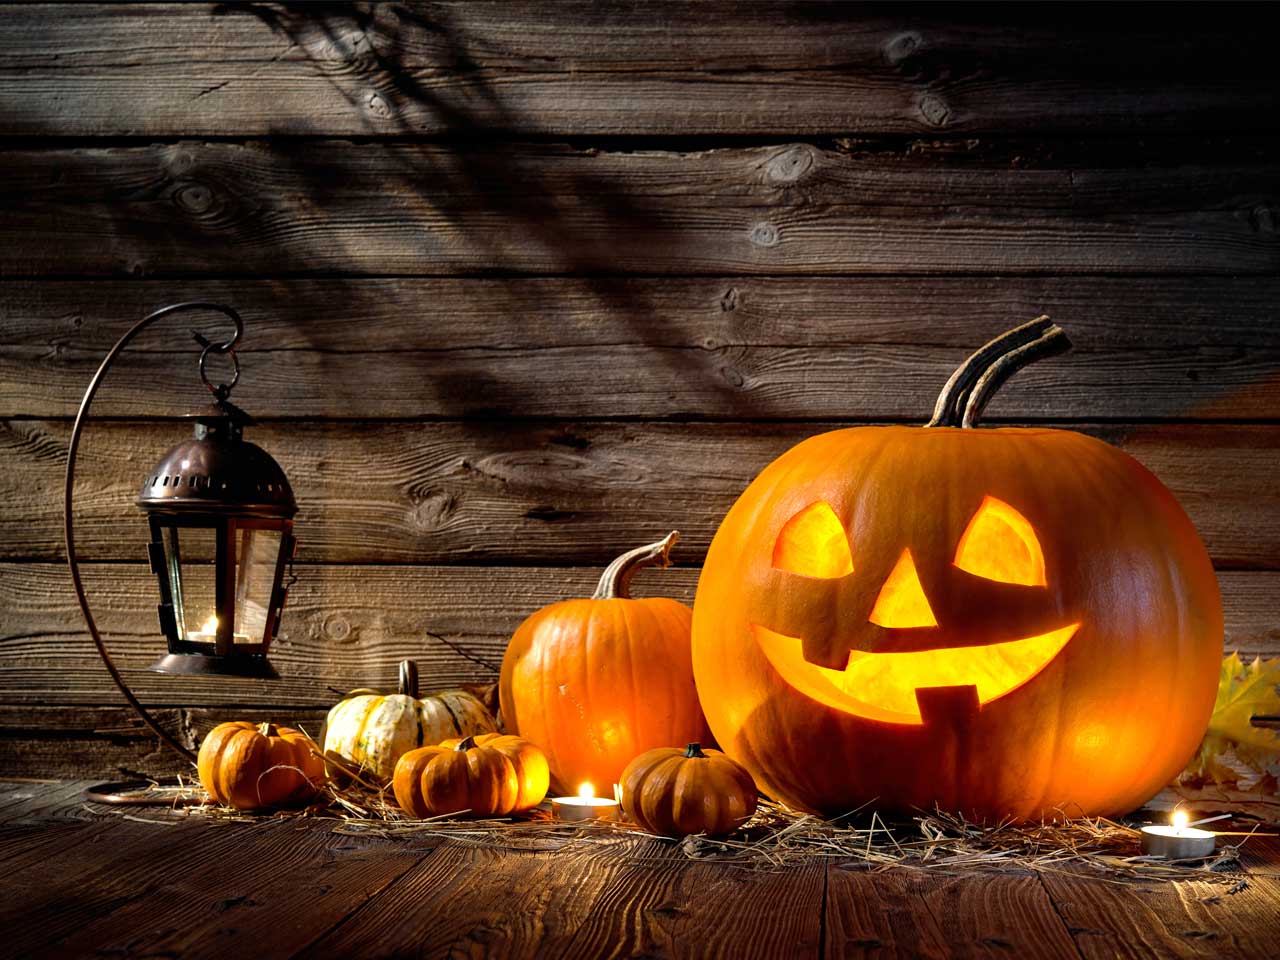 Carved pumpkin jack-o-lantern at Halloween